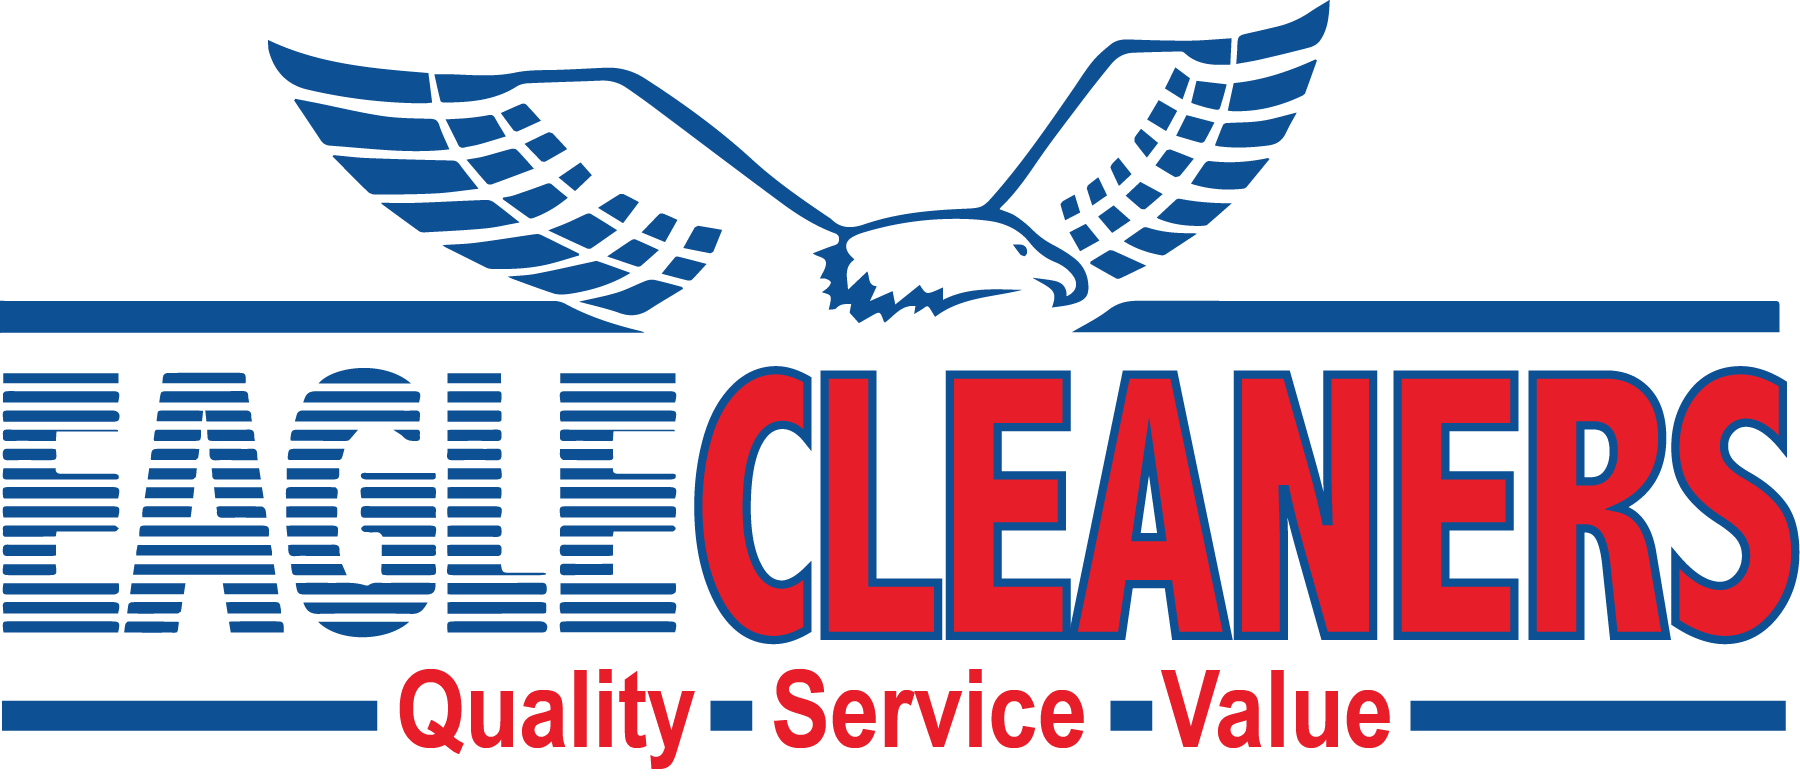 eagle cleaners logo